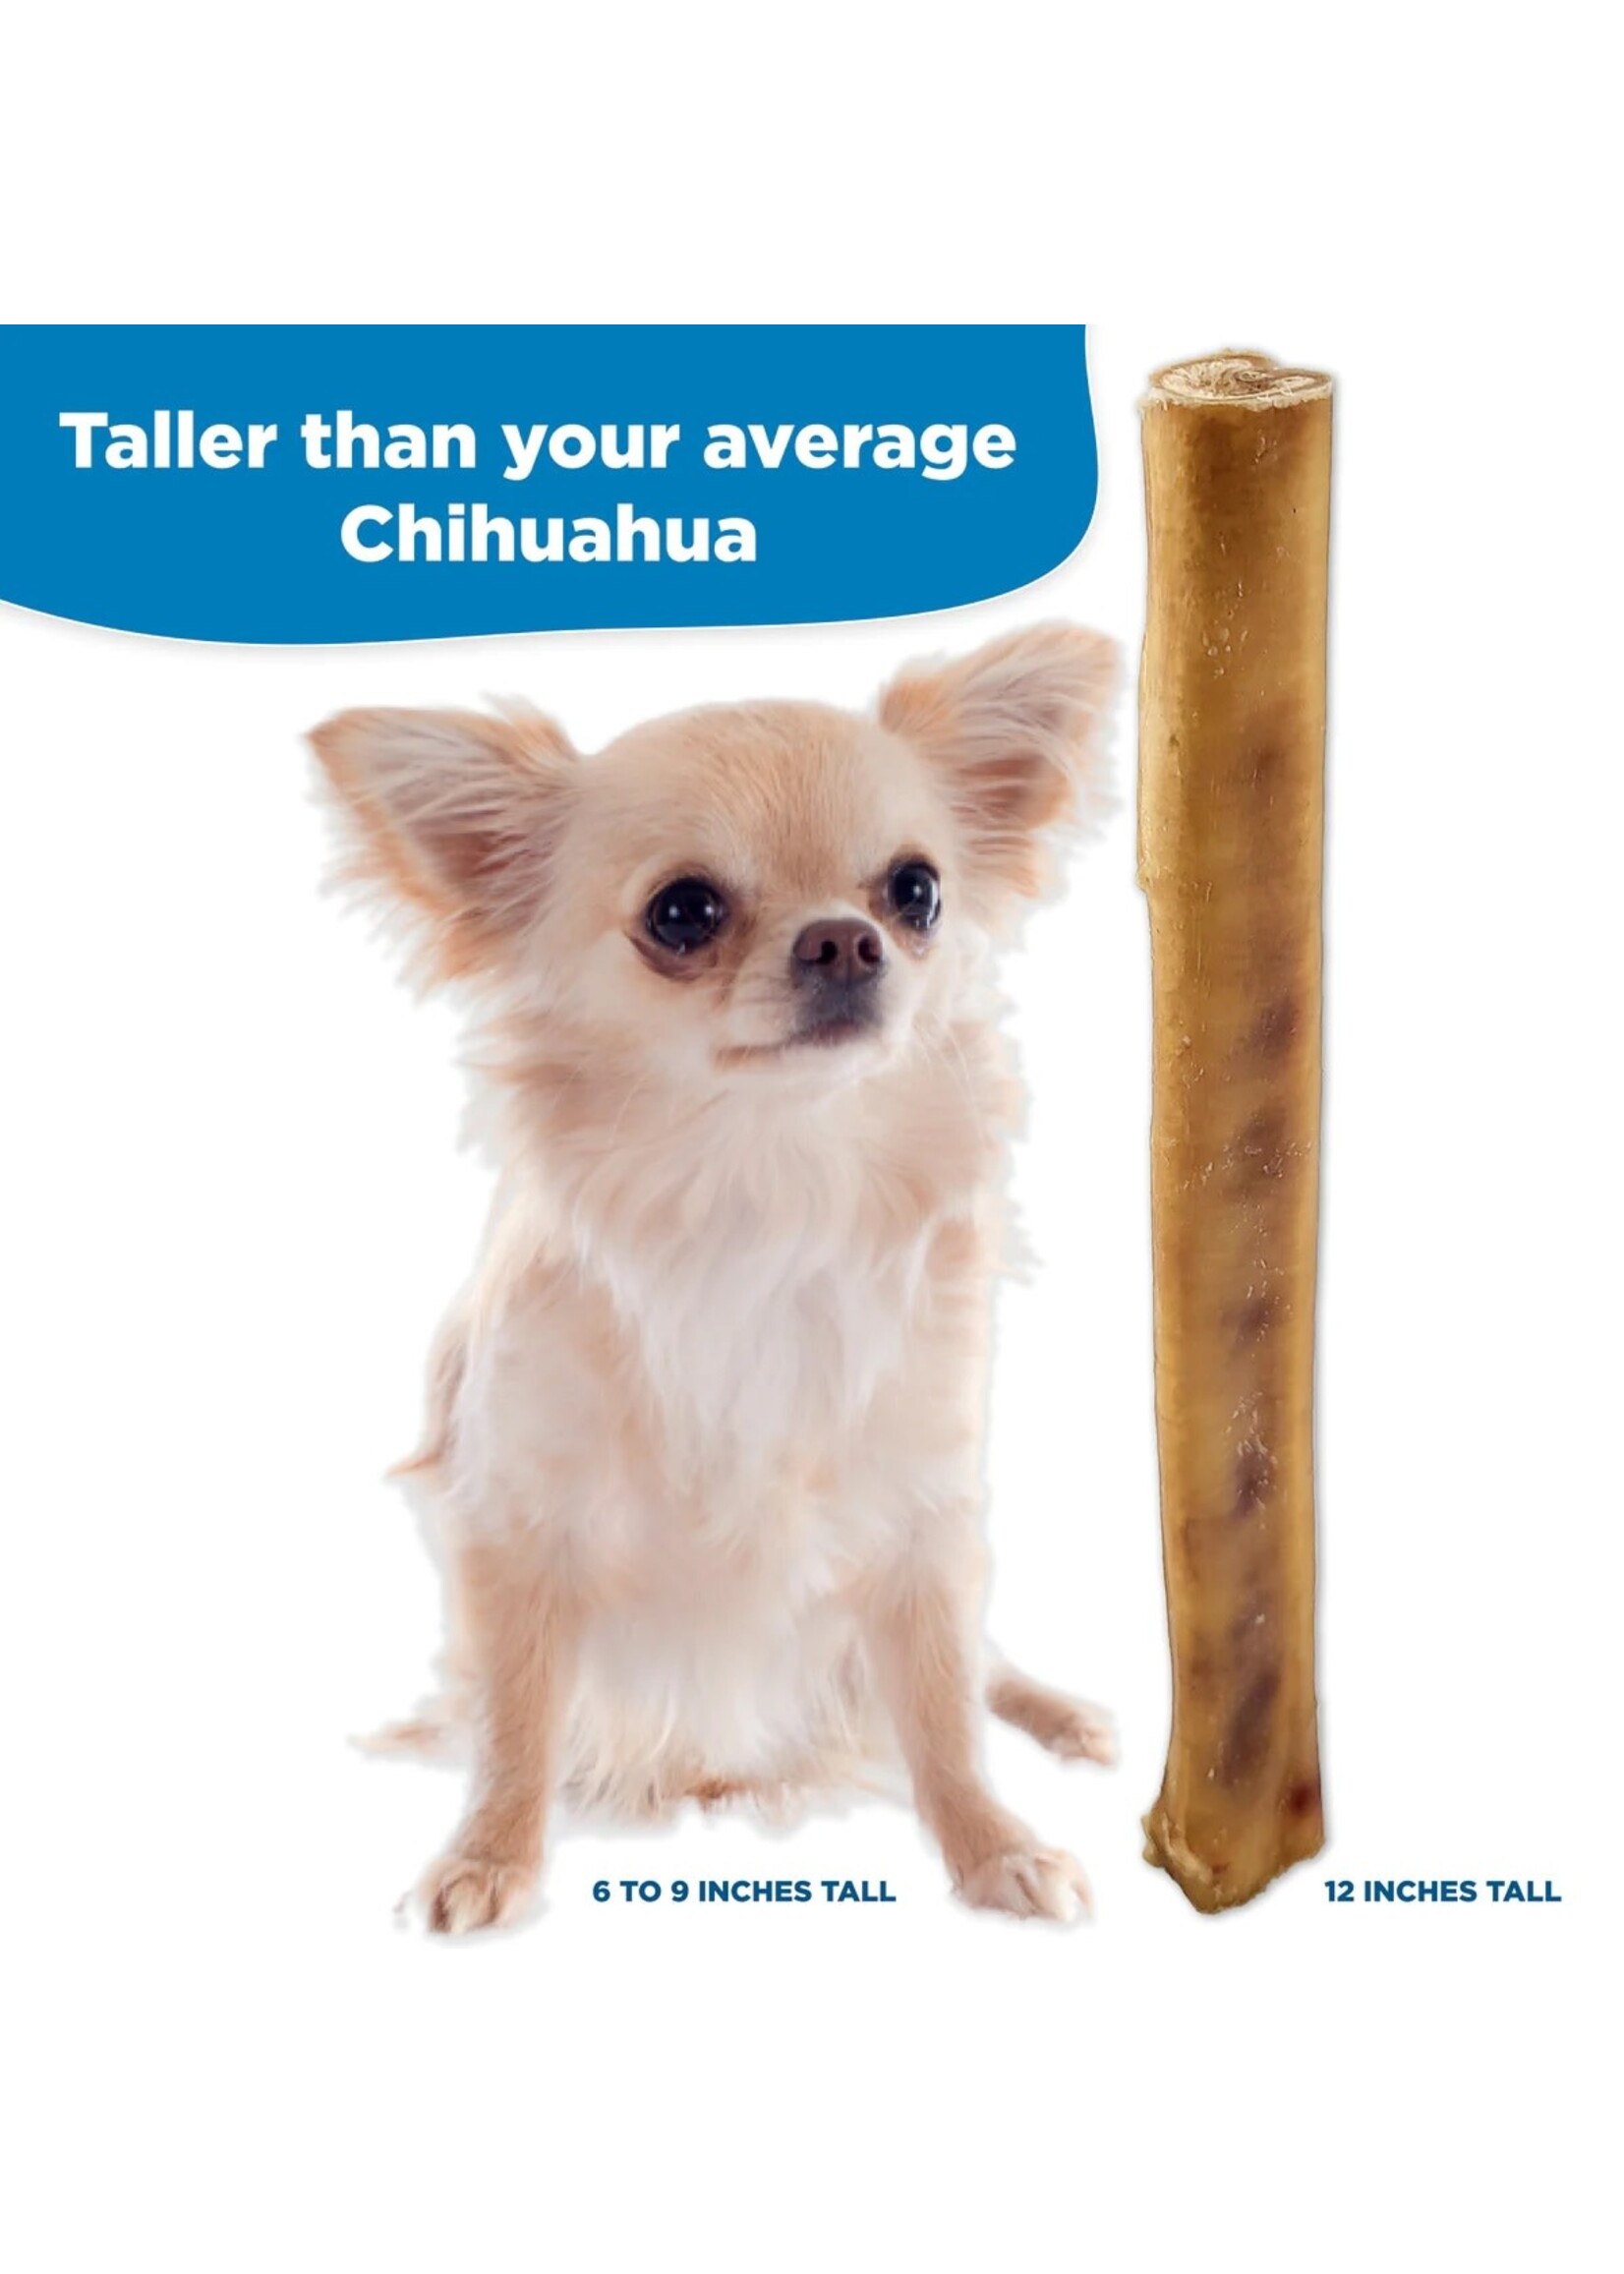 Tuesday's Natural Dog Company Super Jumbo Bully Sticks 12 inches